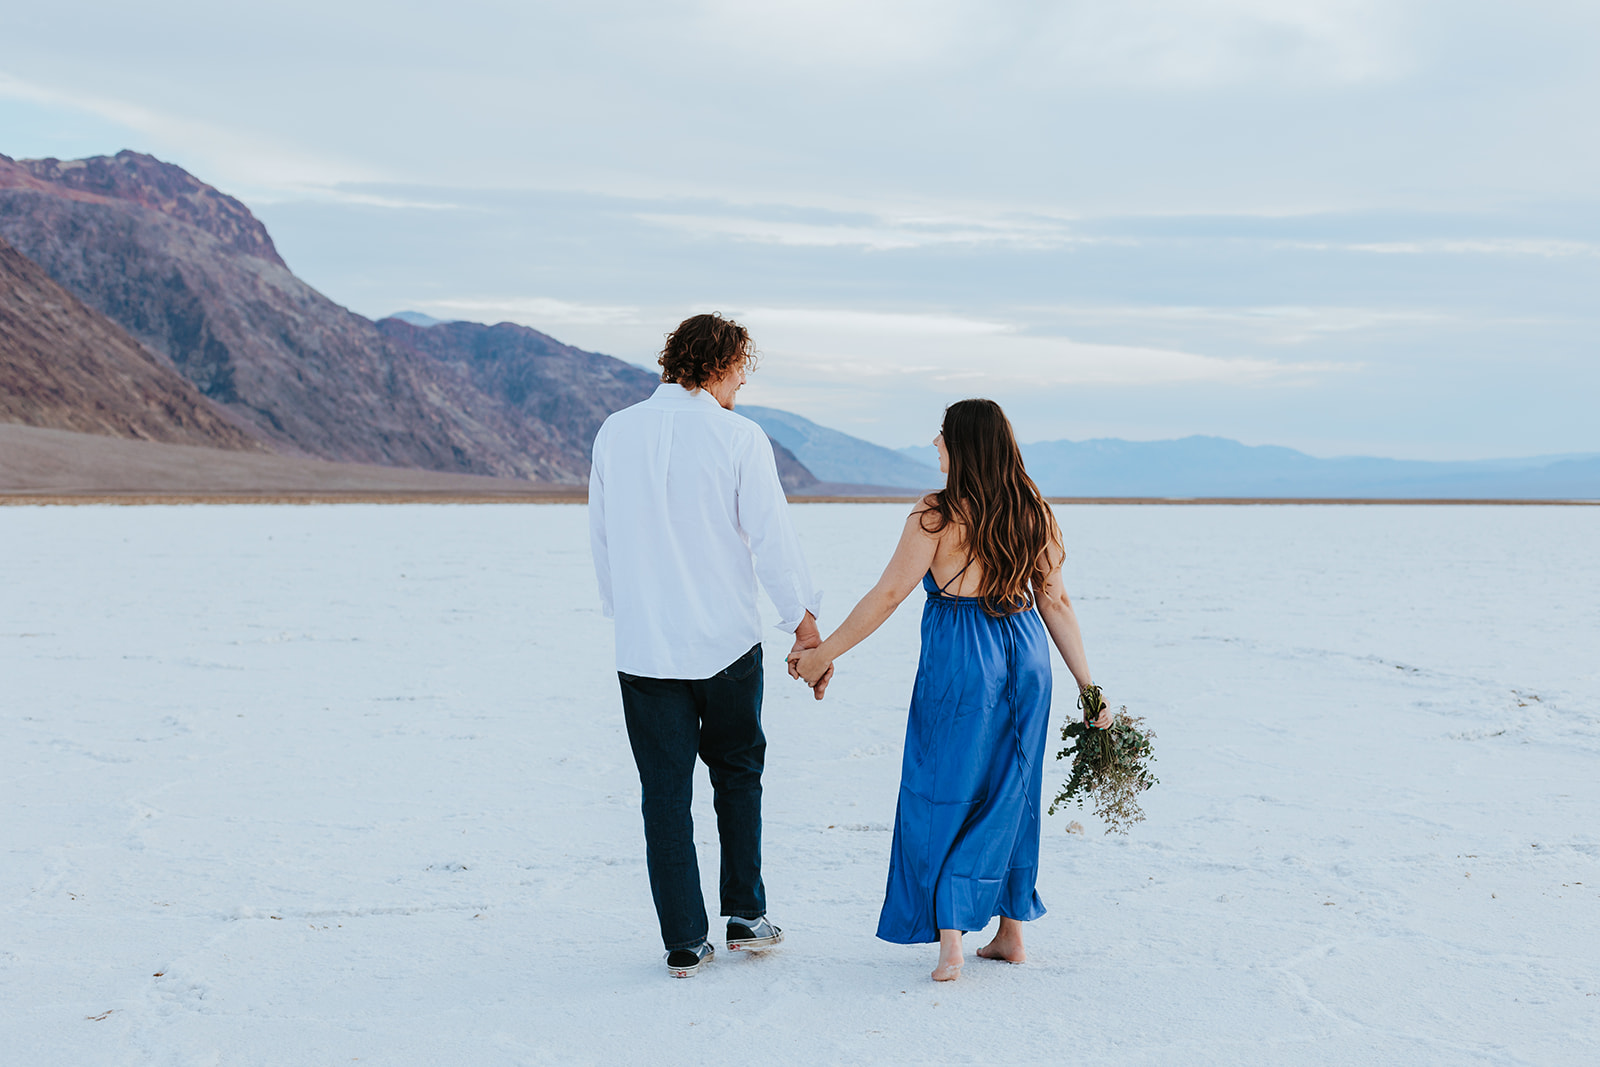 Engagement photos at Artist's Palette, Death Valley National Park